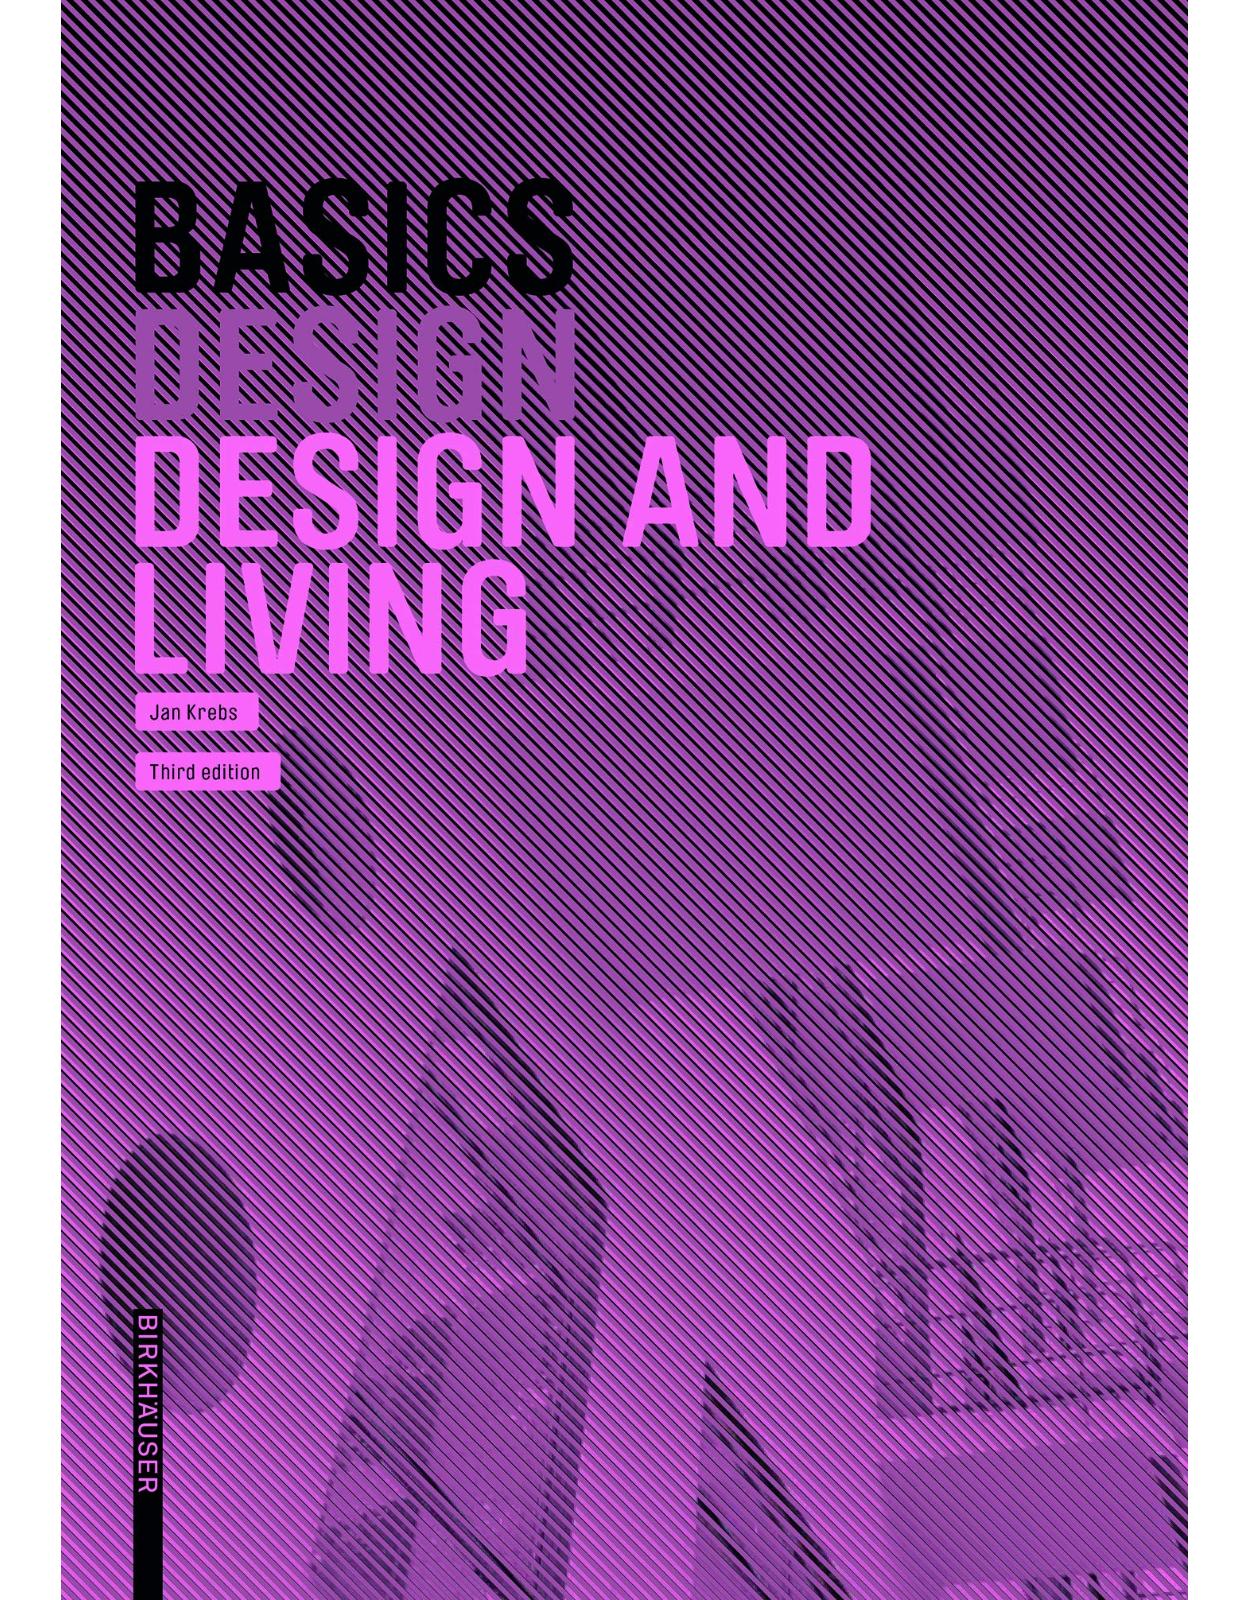 Basics Design and Living